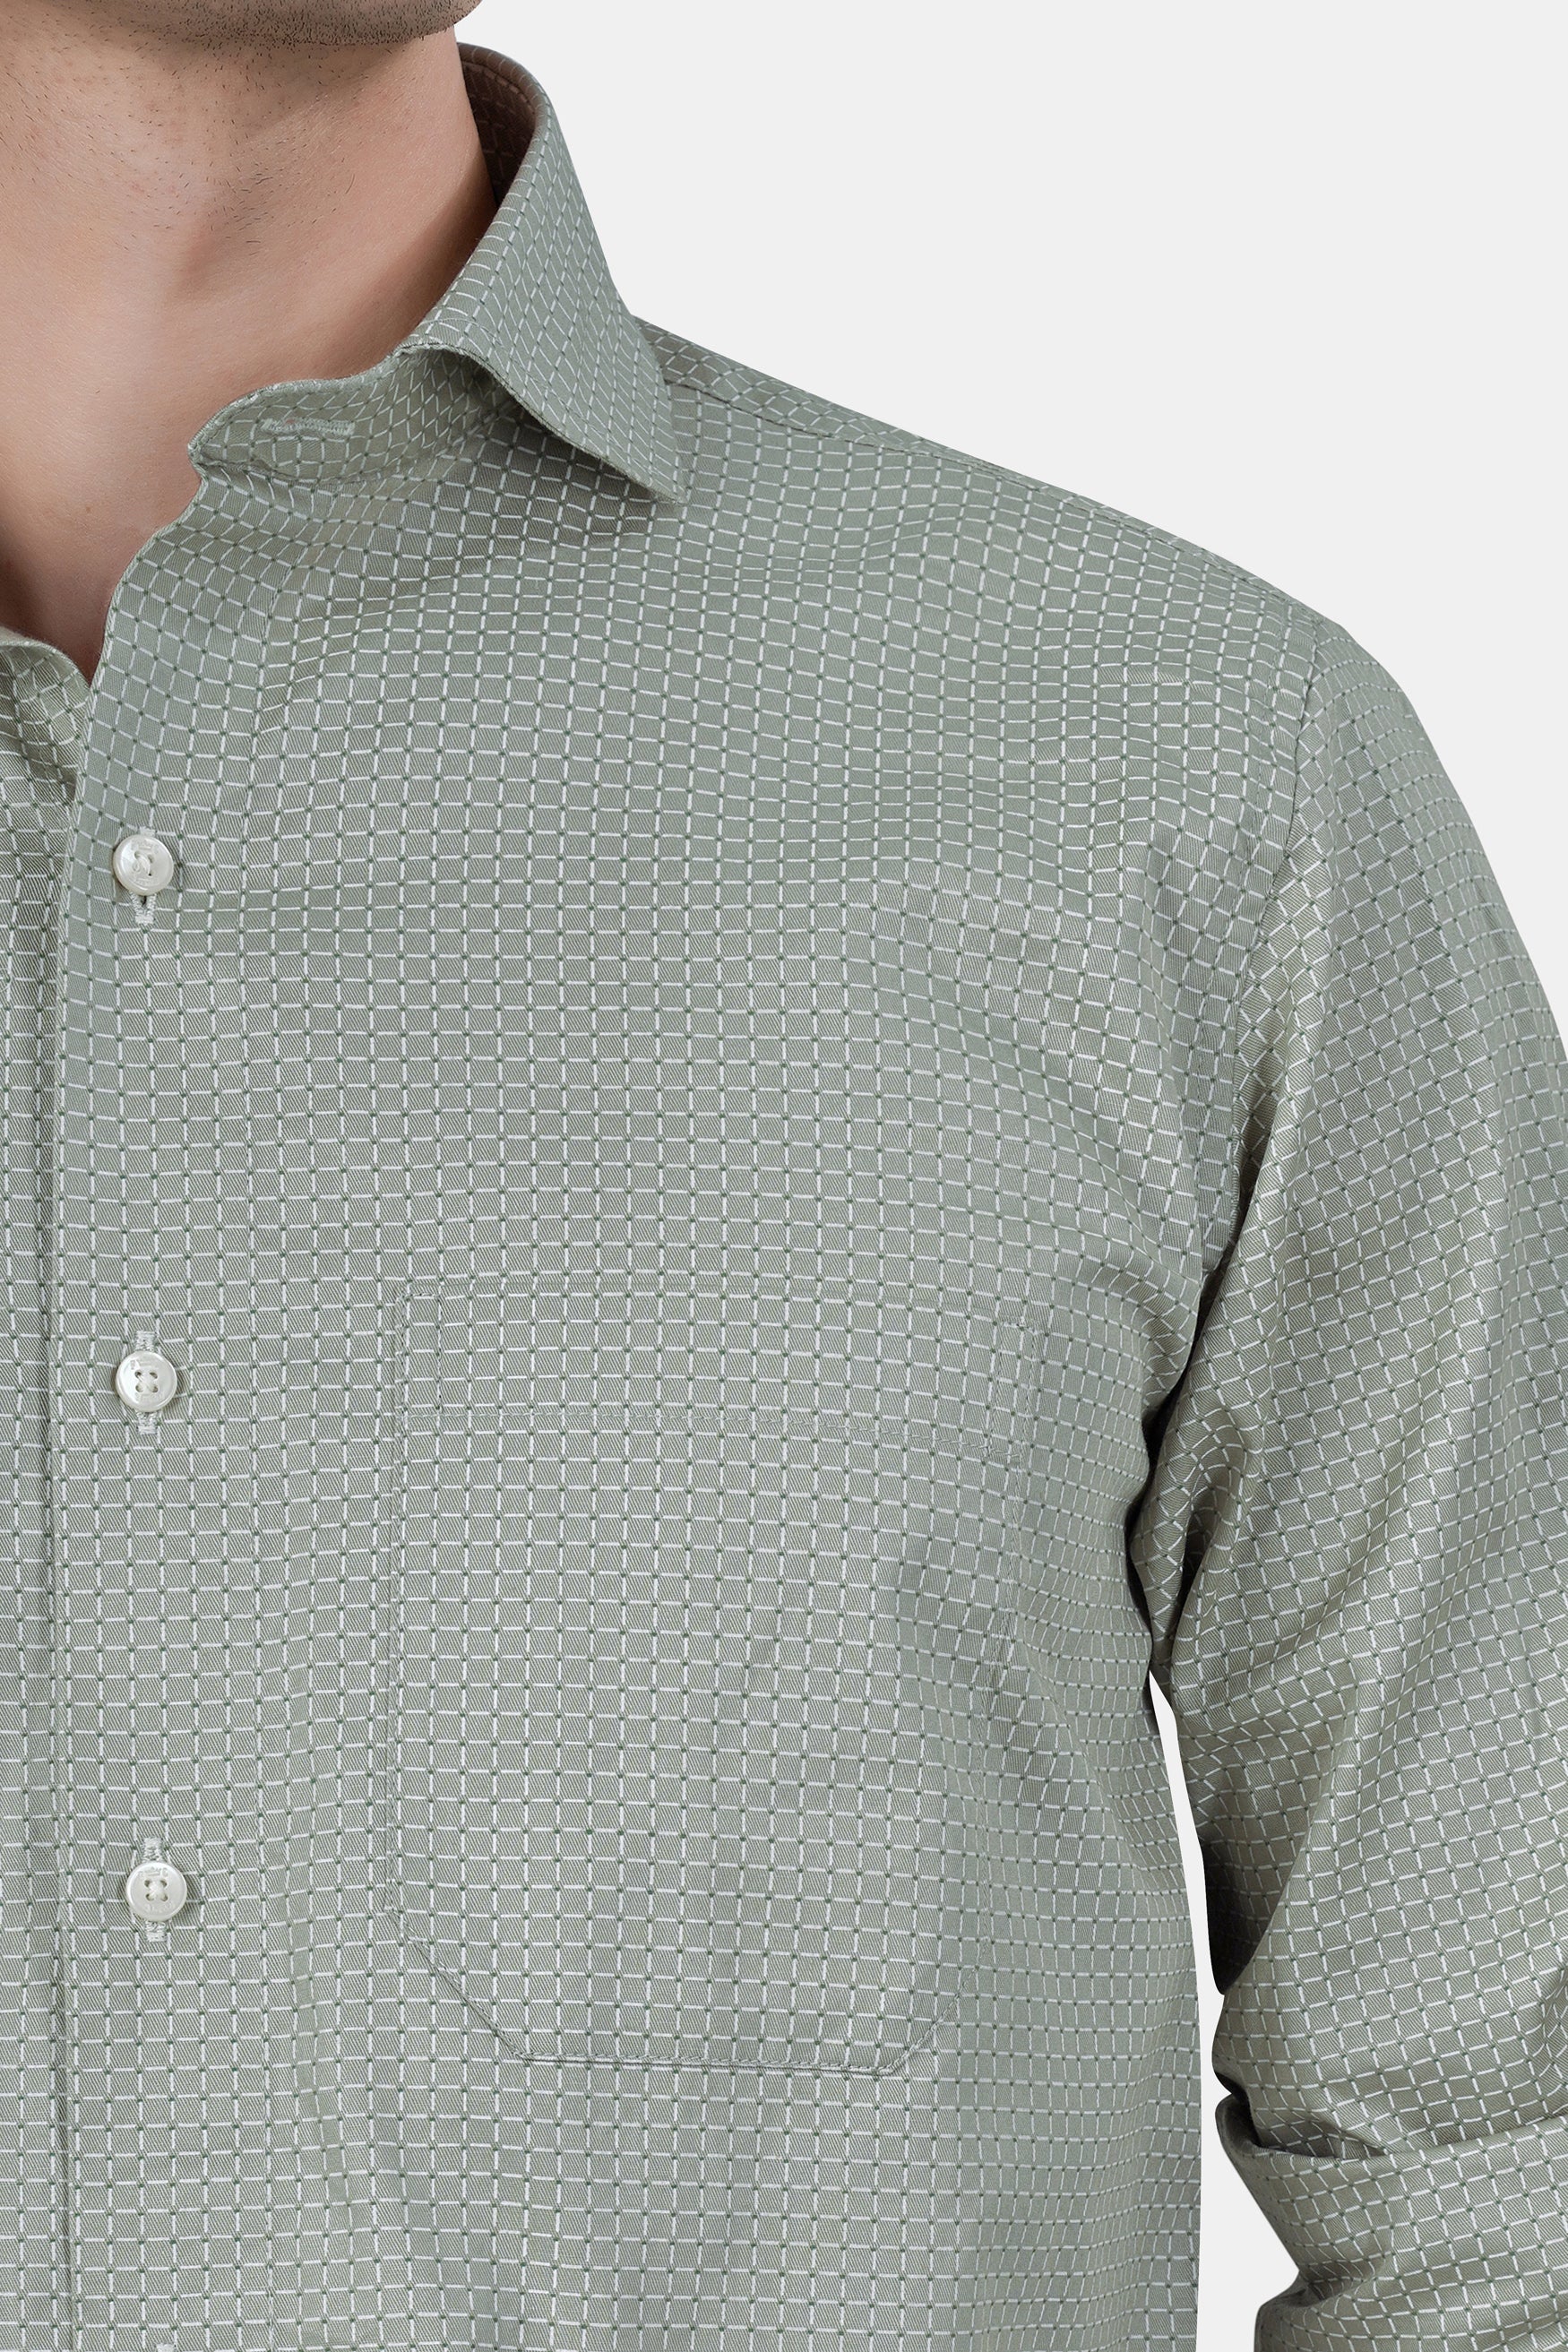 Mantle Green and Black Checkered Dobby Textured Premium Giza Cotton Shirt